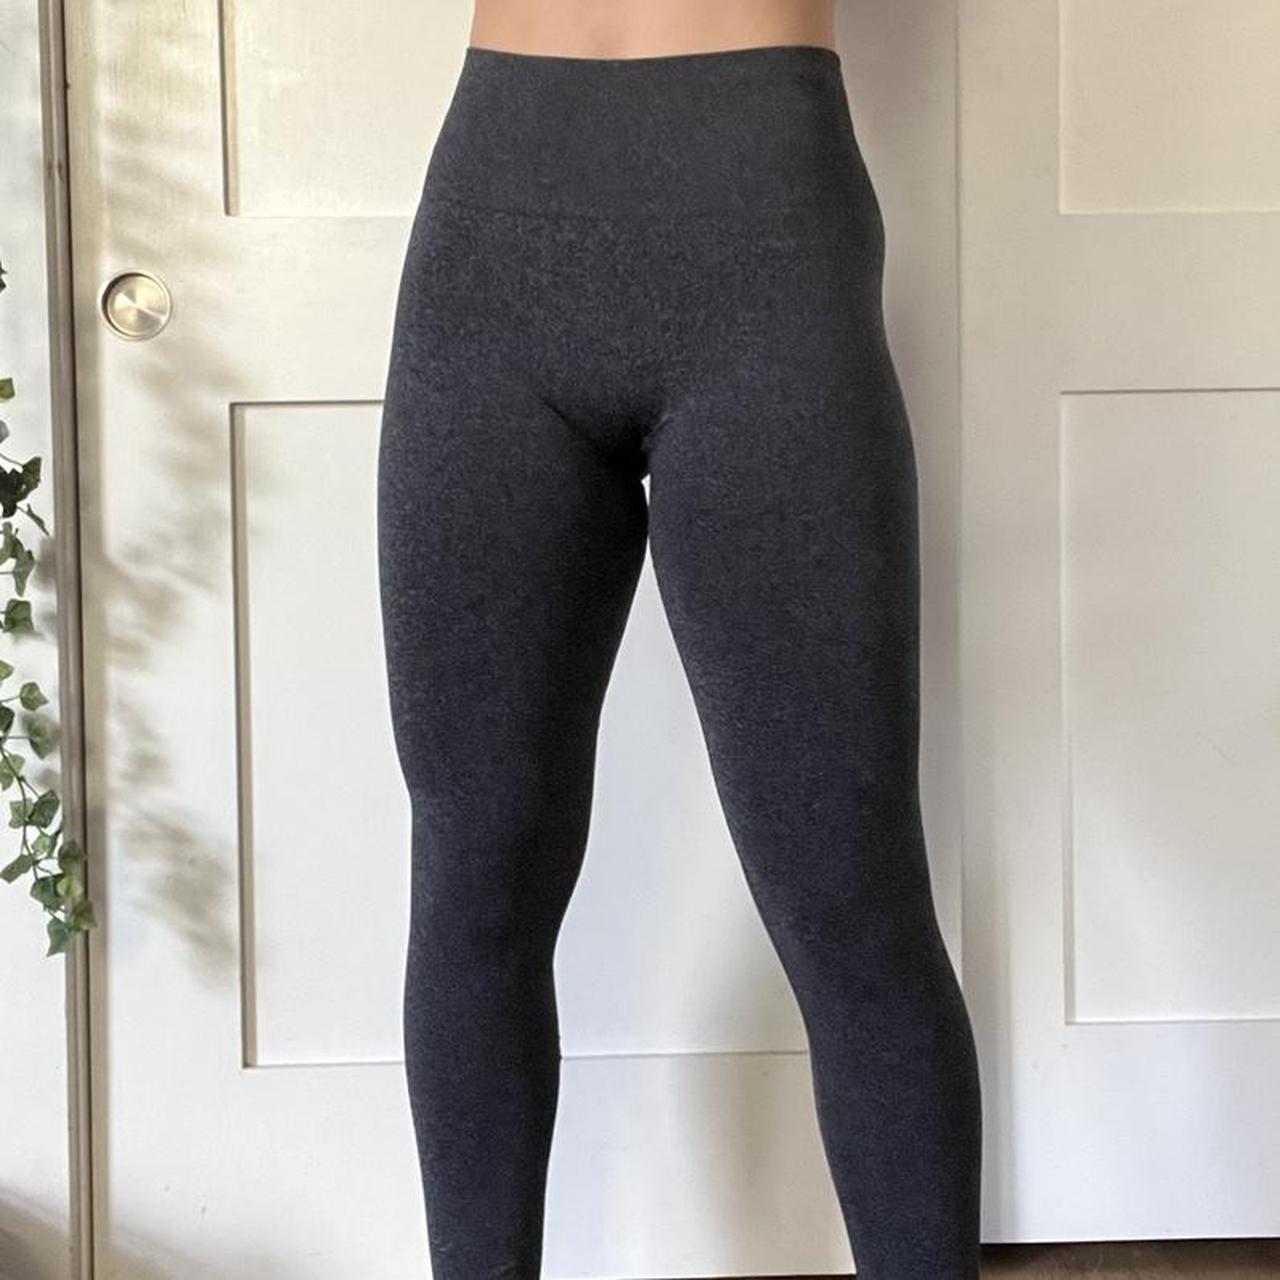 Seamless charcoal grey leggings, squat proof, size